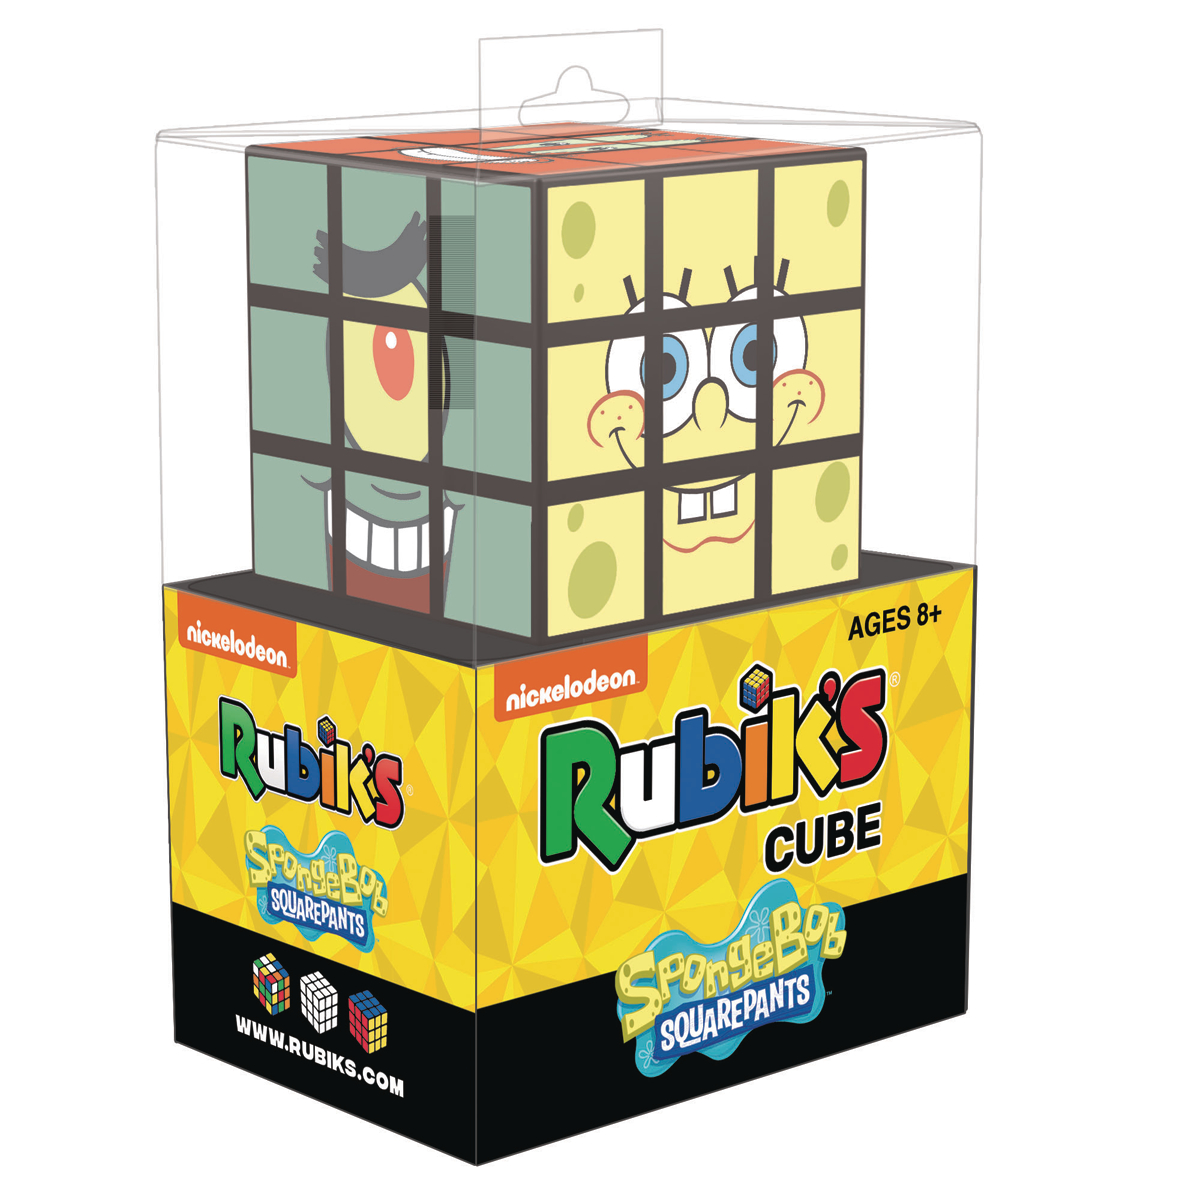 Rubiks Cube Spongebob Squarepants